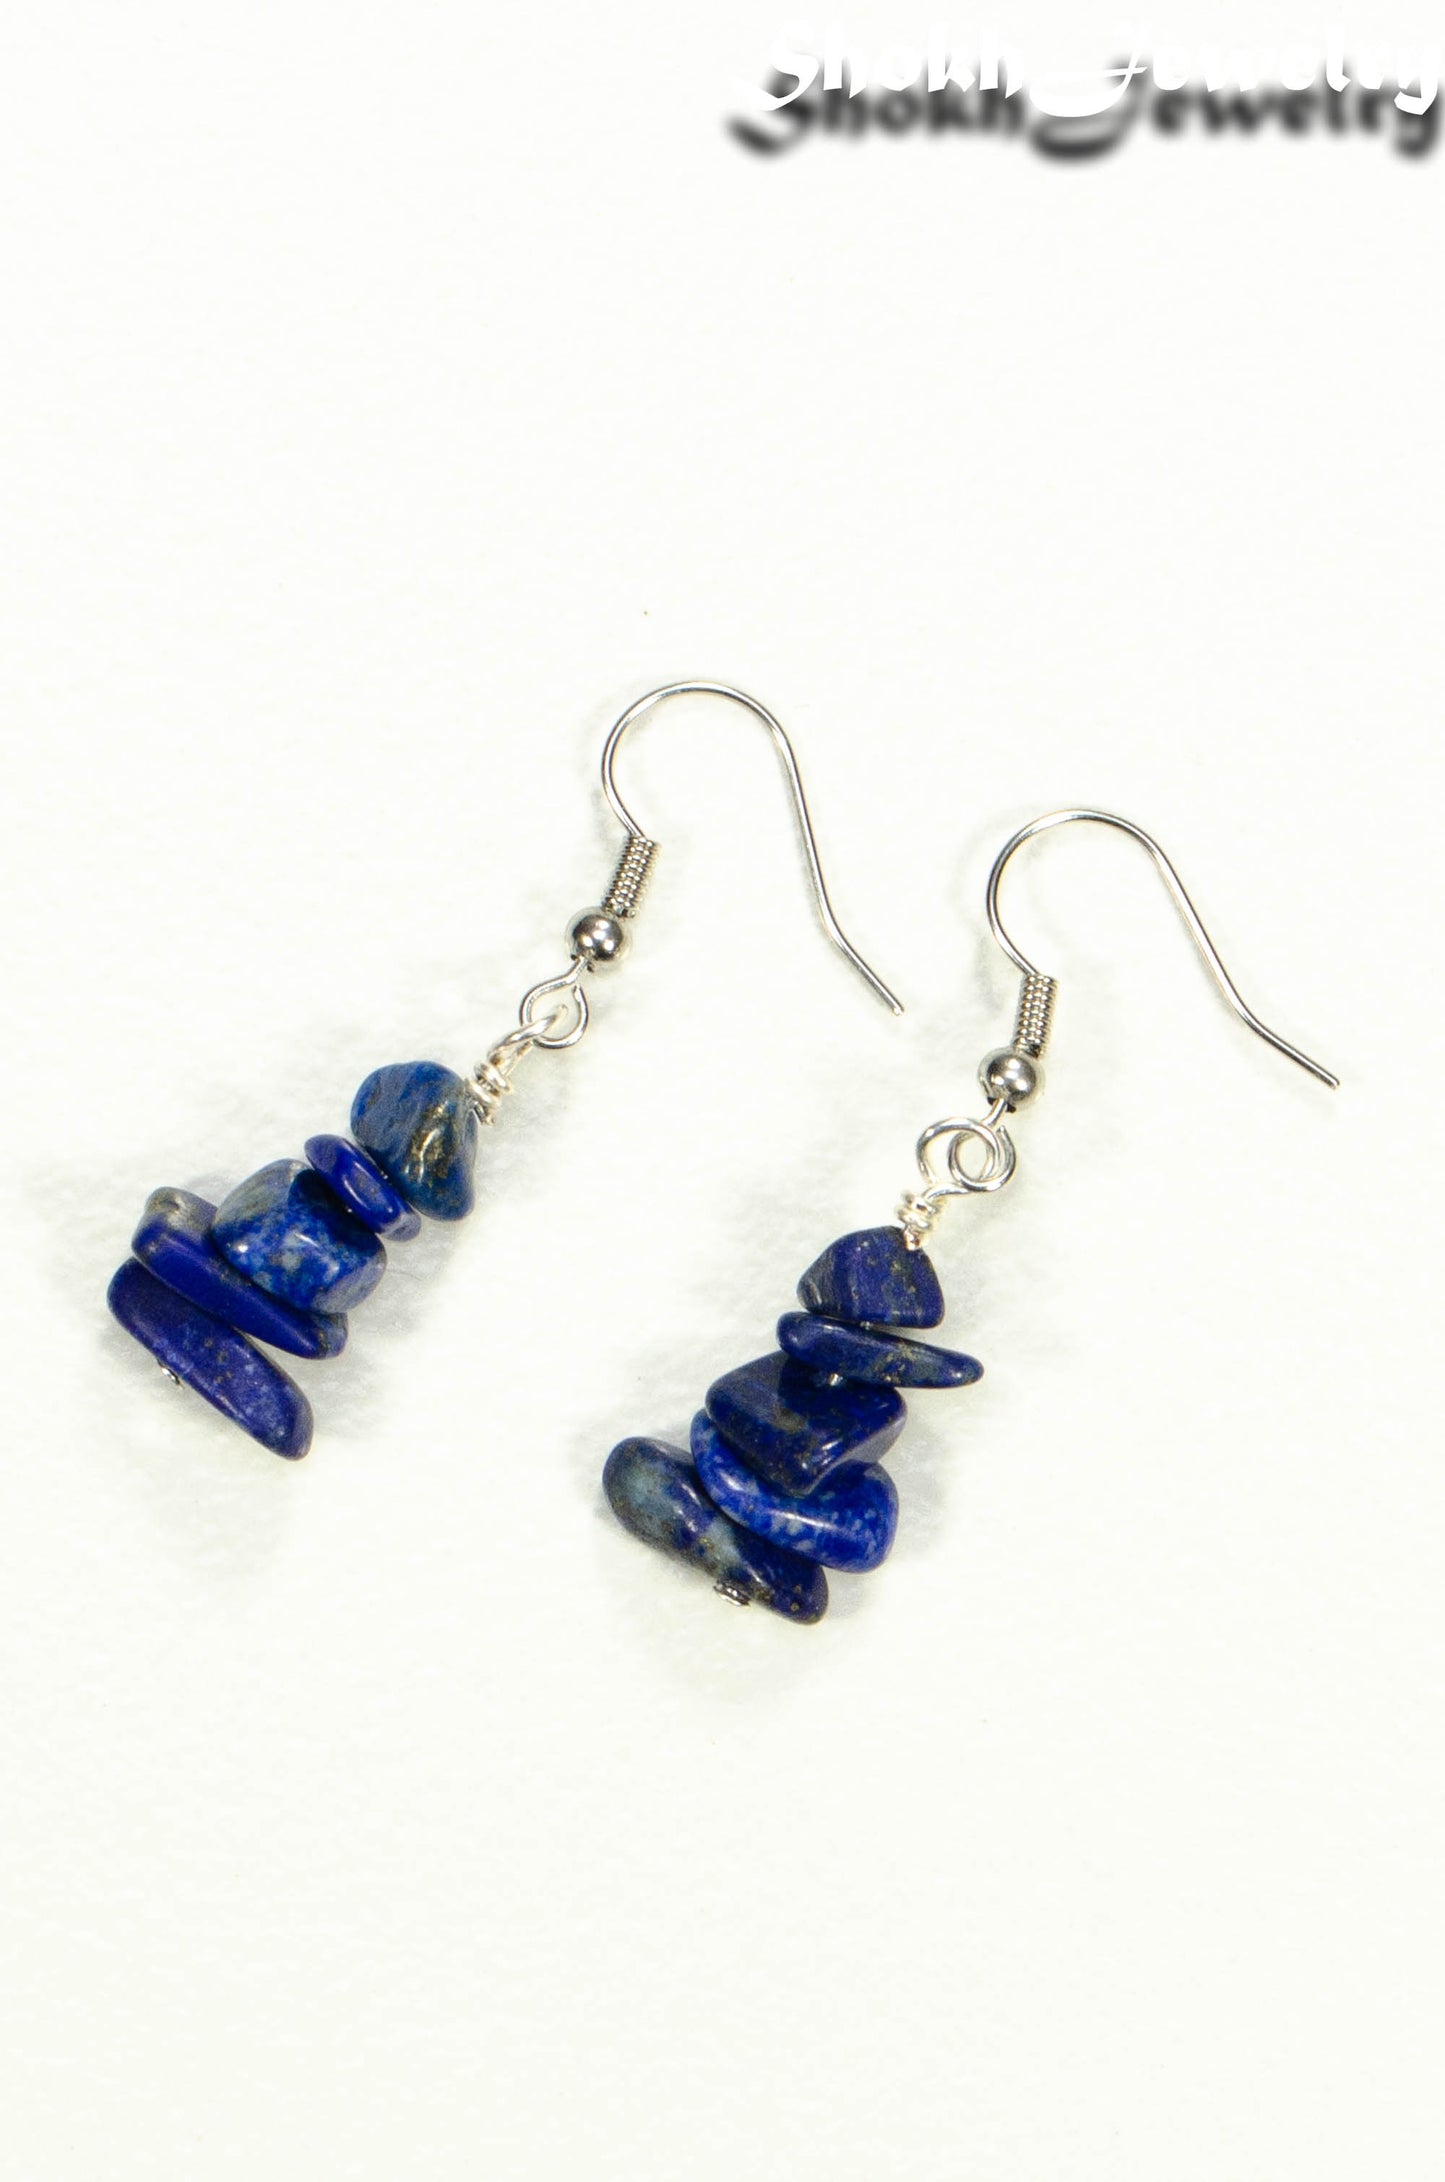 Top view of Simple Lapis Lazuli Crystal Chip Earrings.